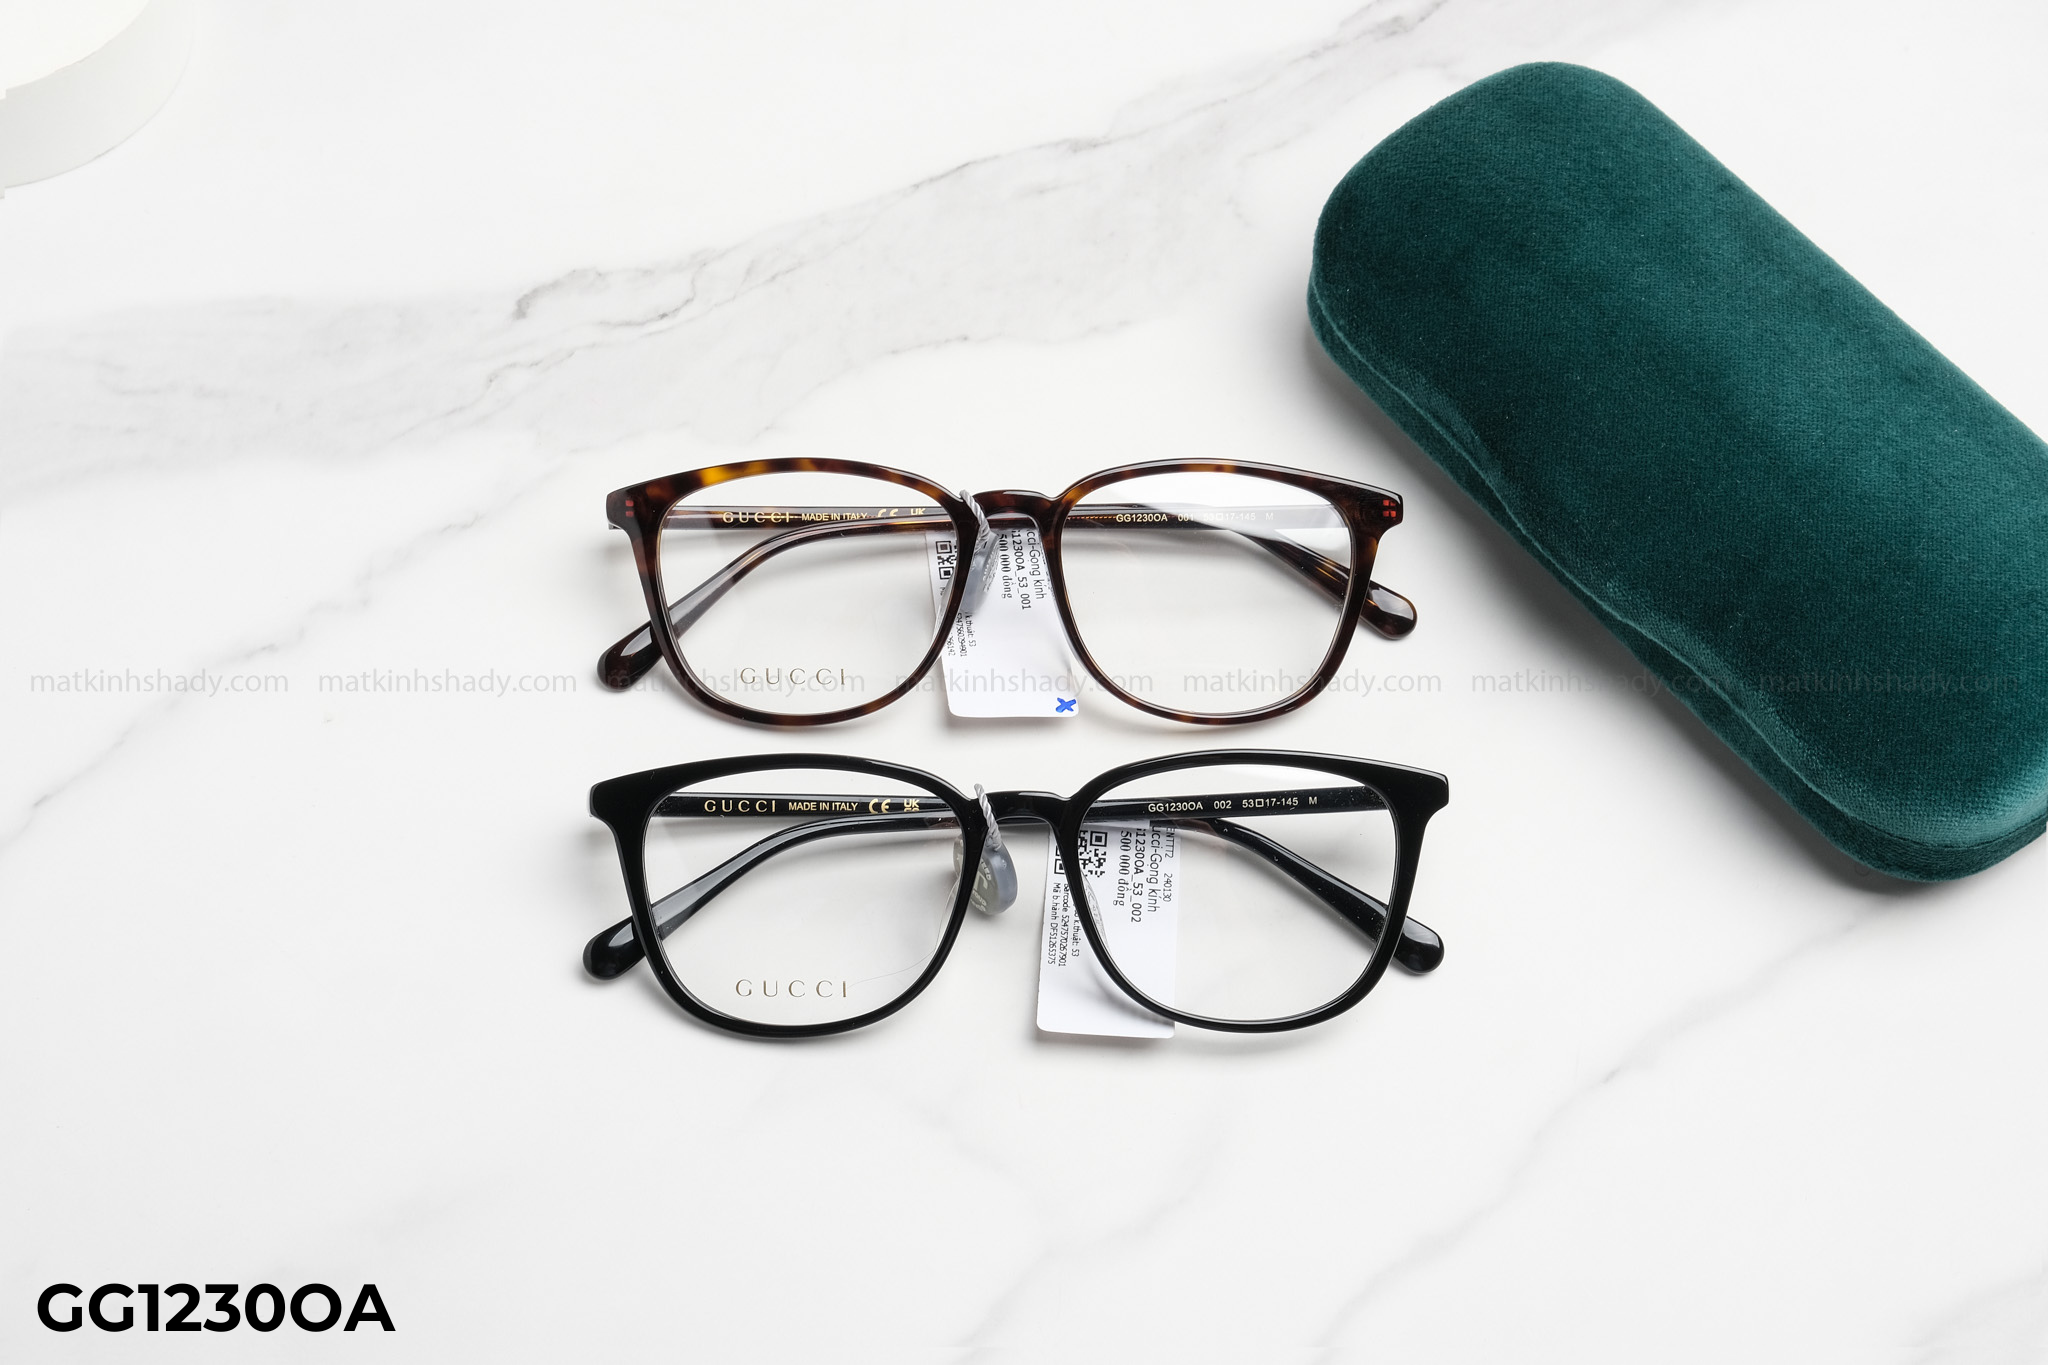  Gucci Eyewear - Glasses - GG1230OA 